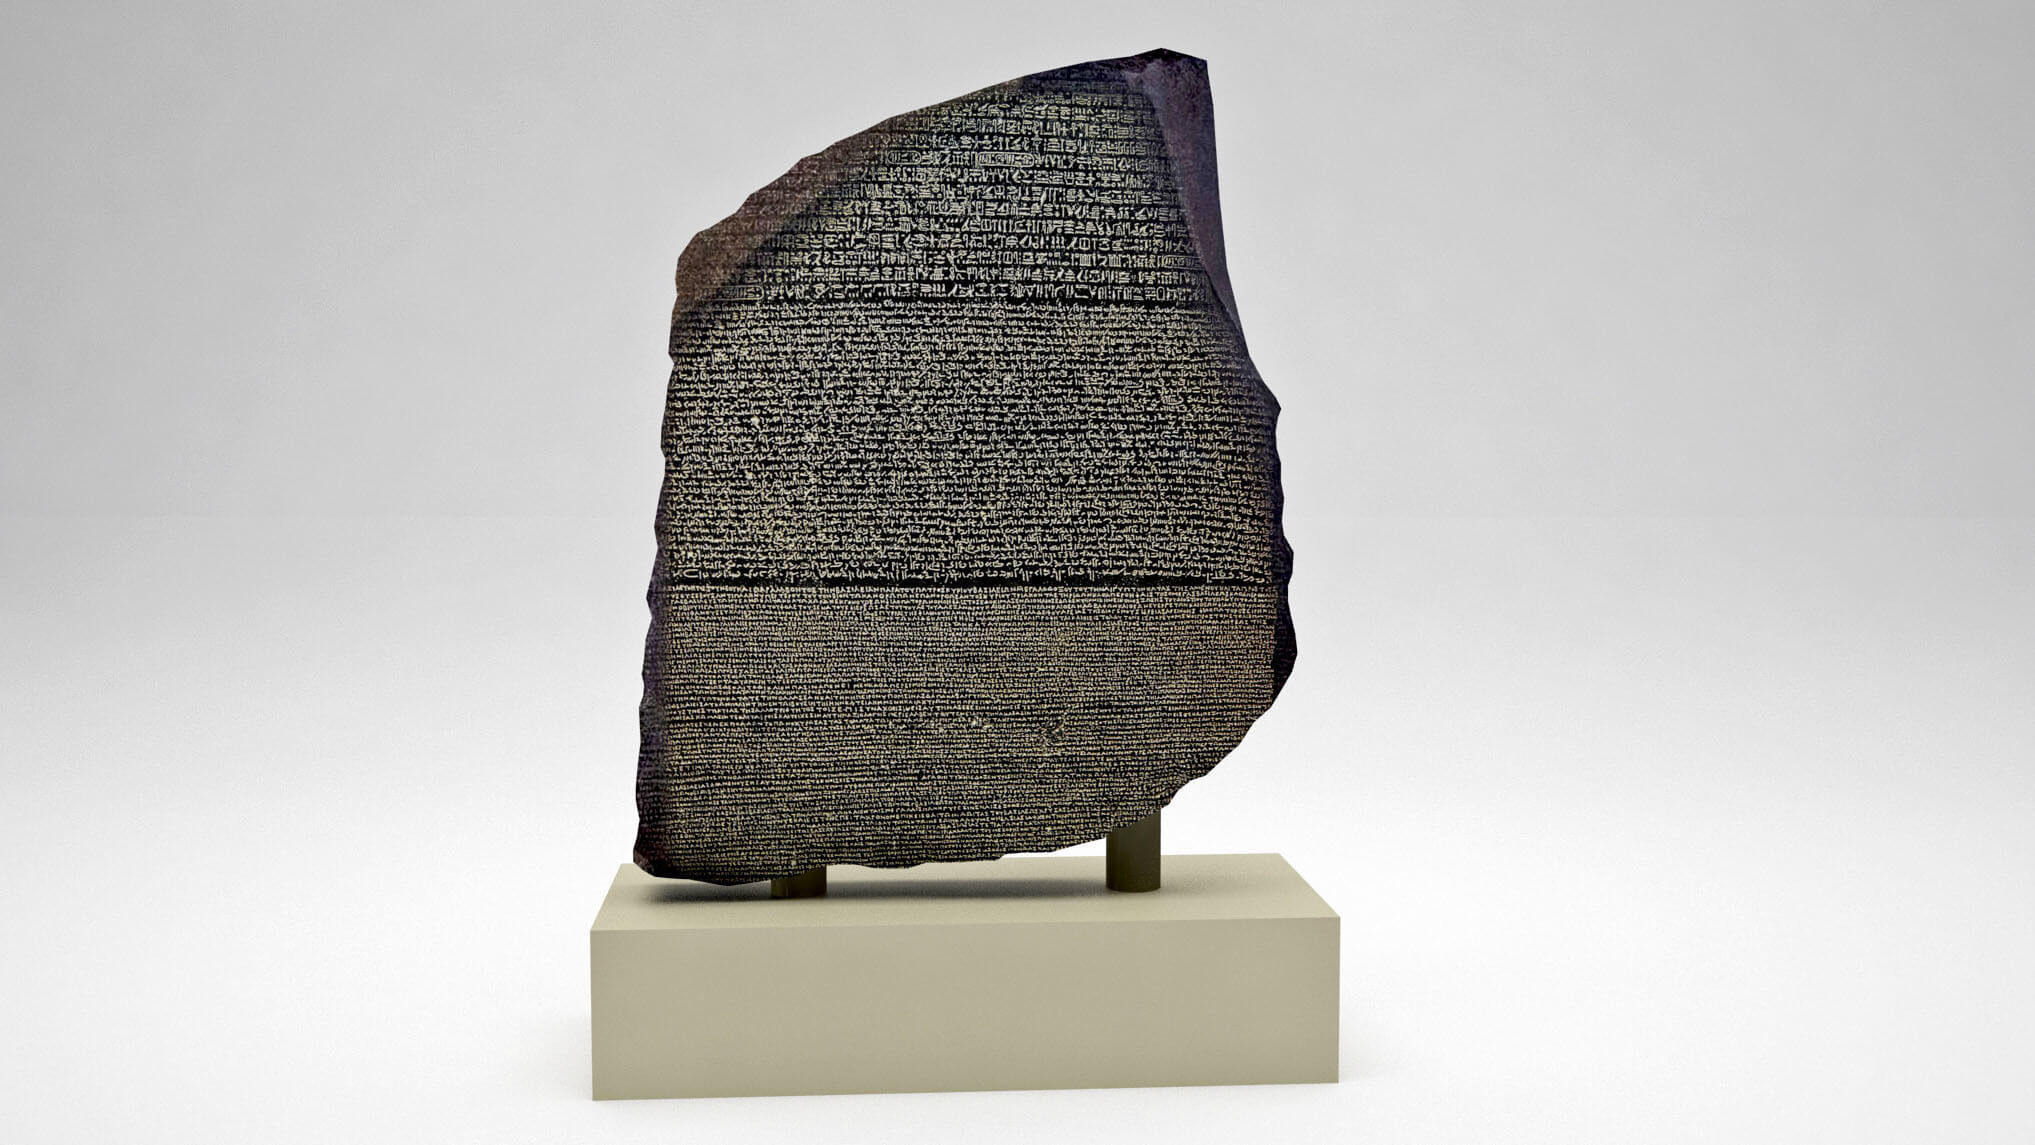 The rosette stone that helped translate Egyptian hieroglyphs